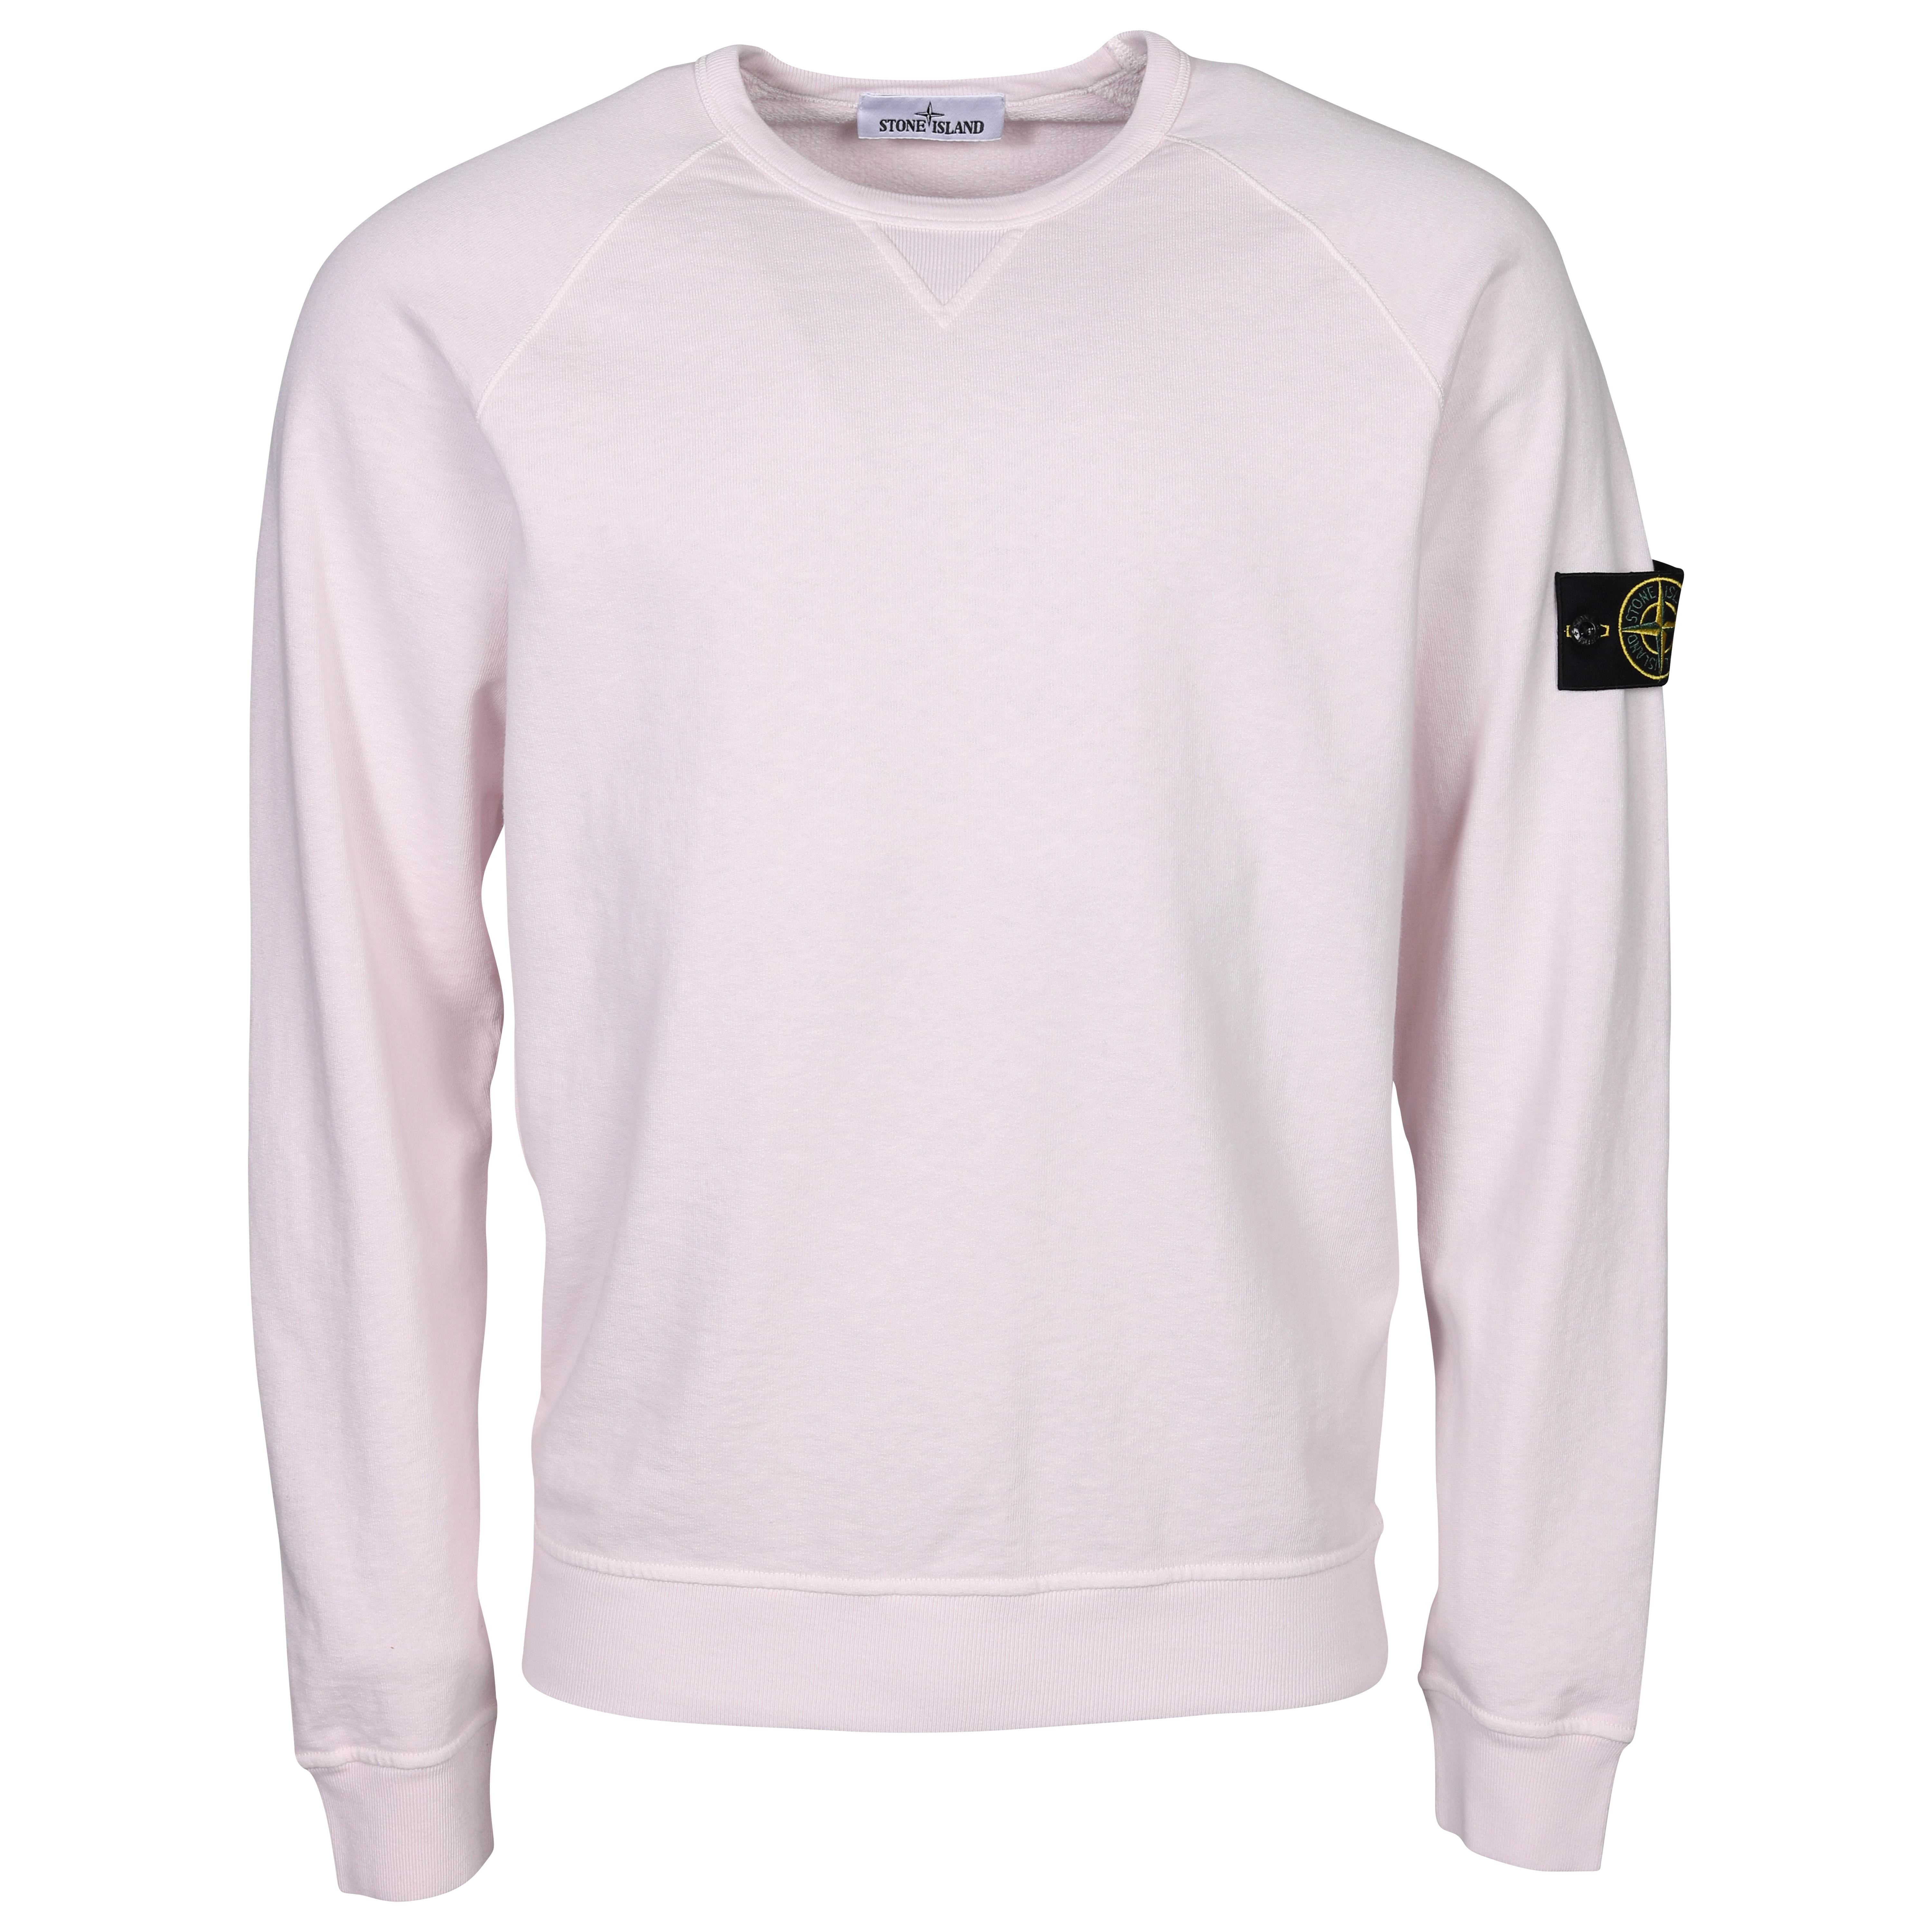 Stone Island Sweatshirt in Washed Light Pink 3XL